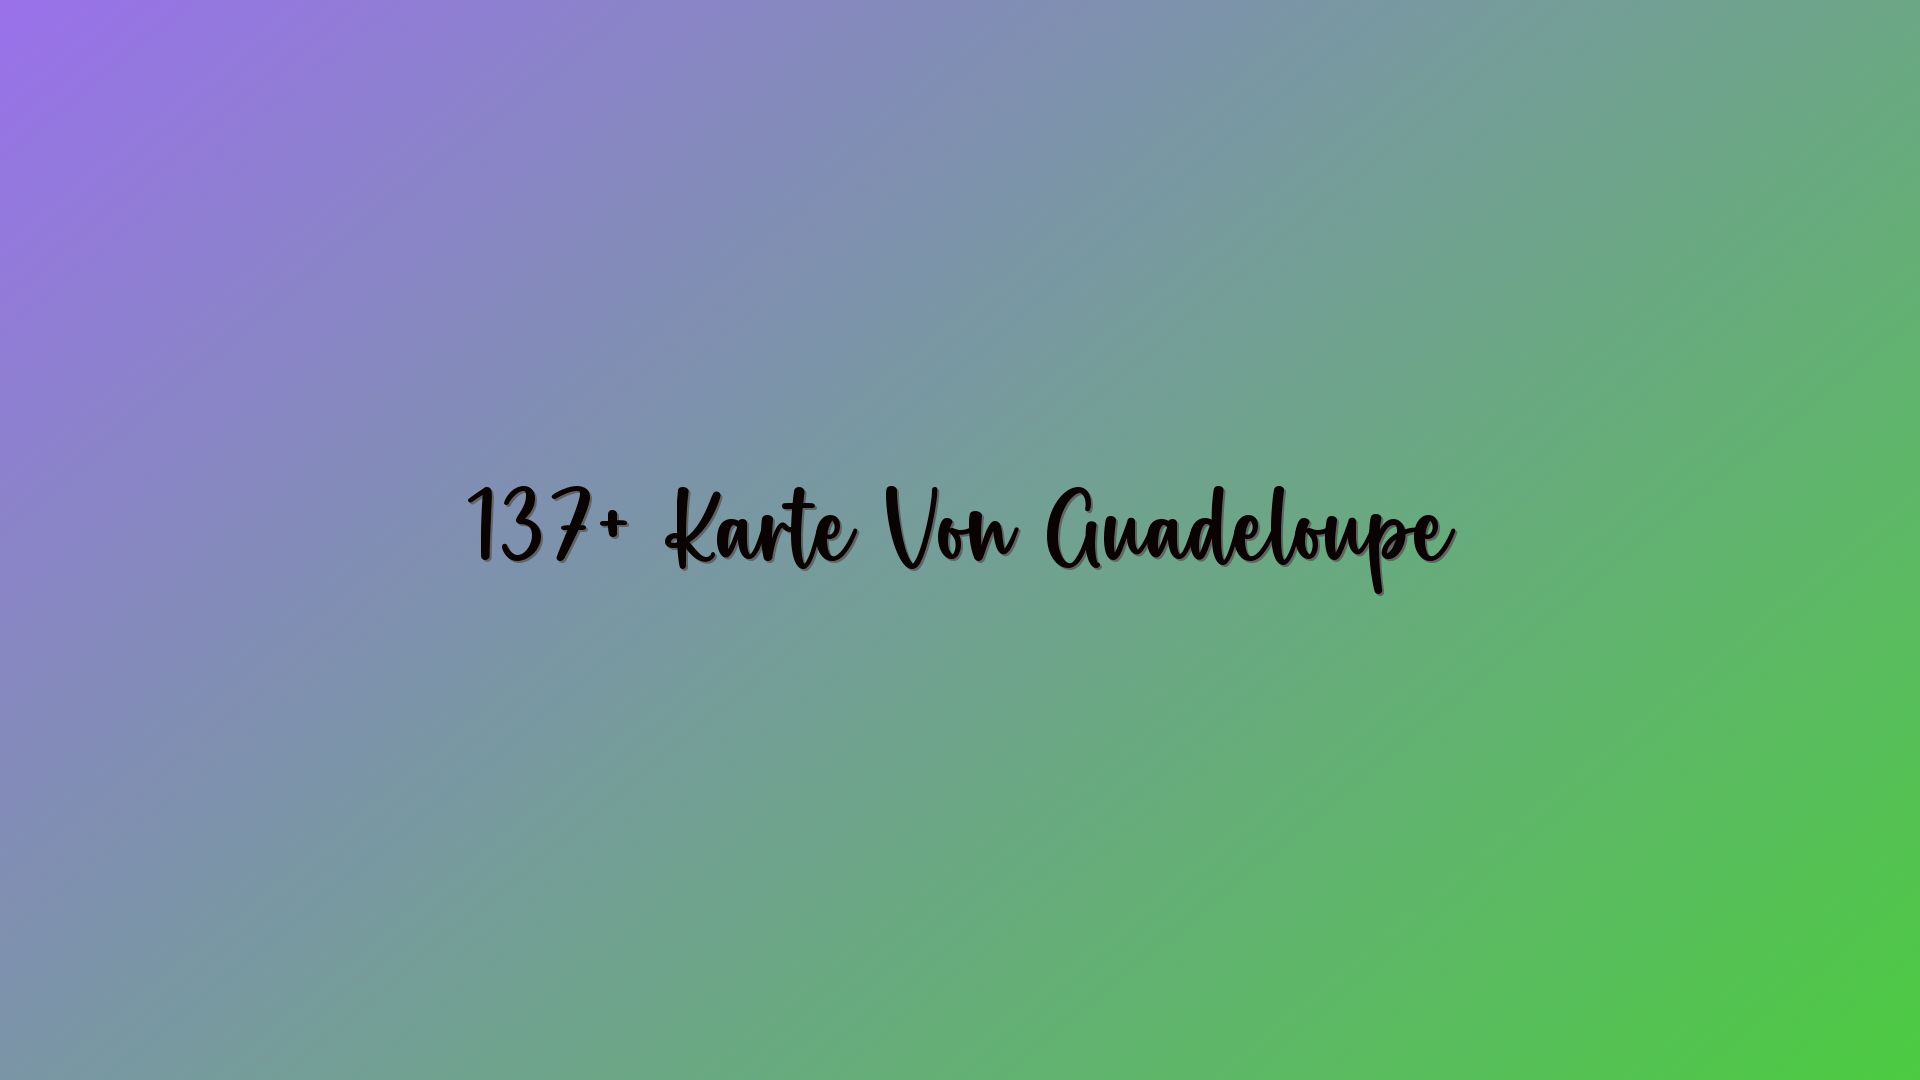 137+ Karte Von Guadeloupe